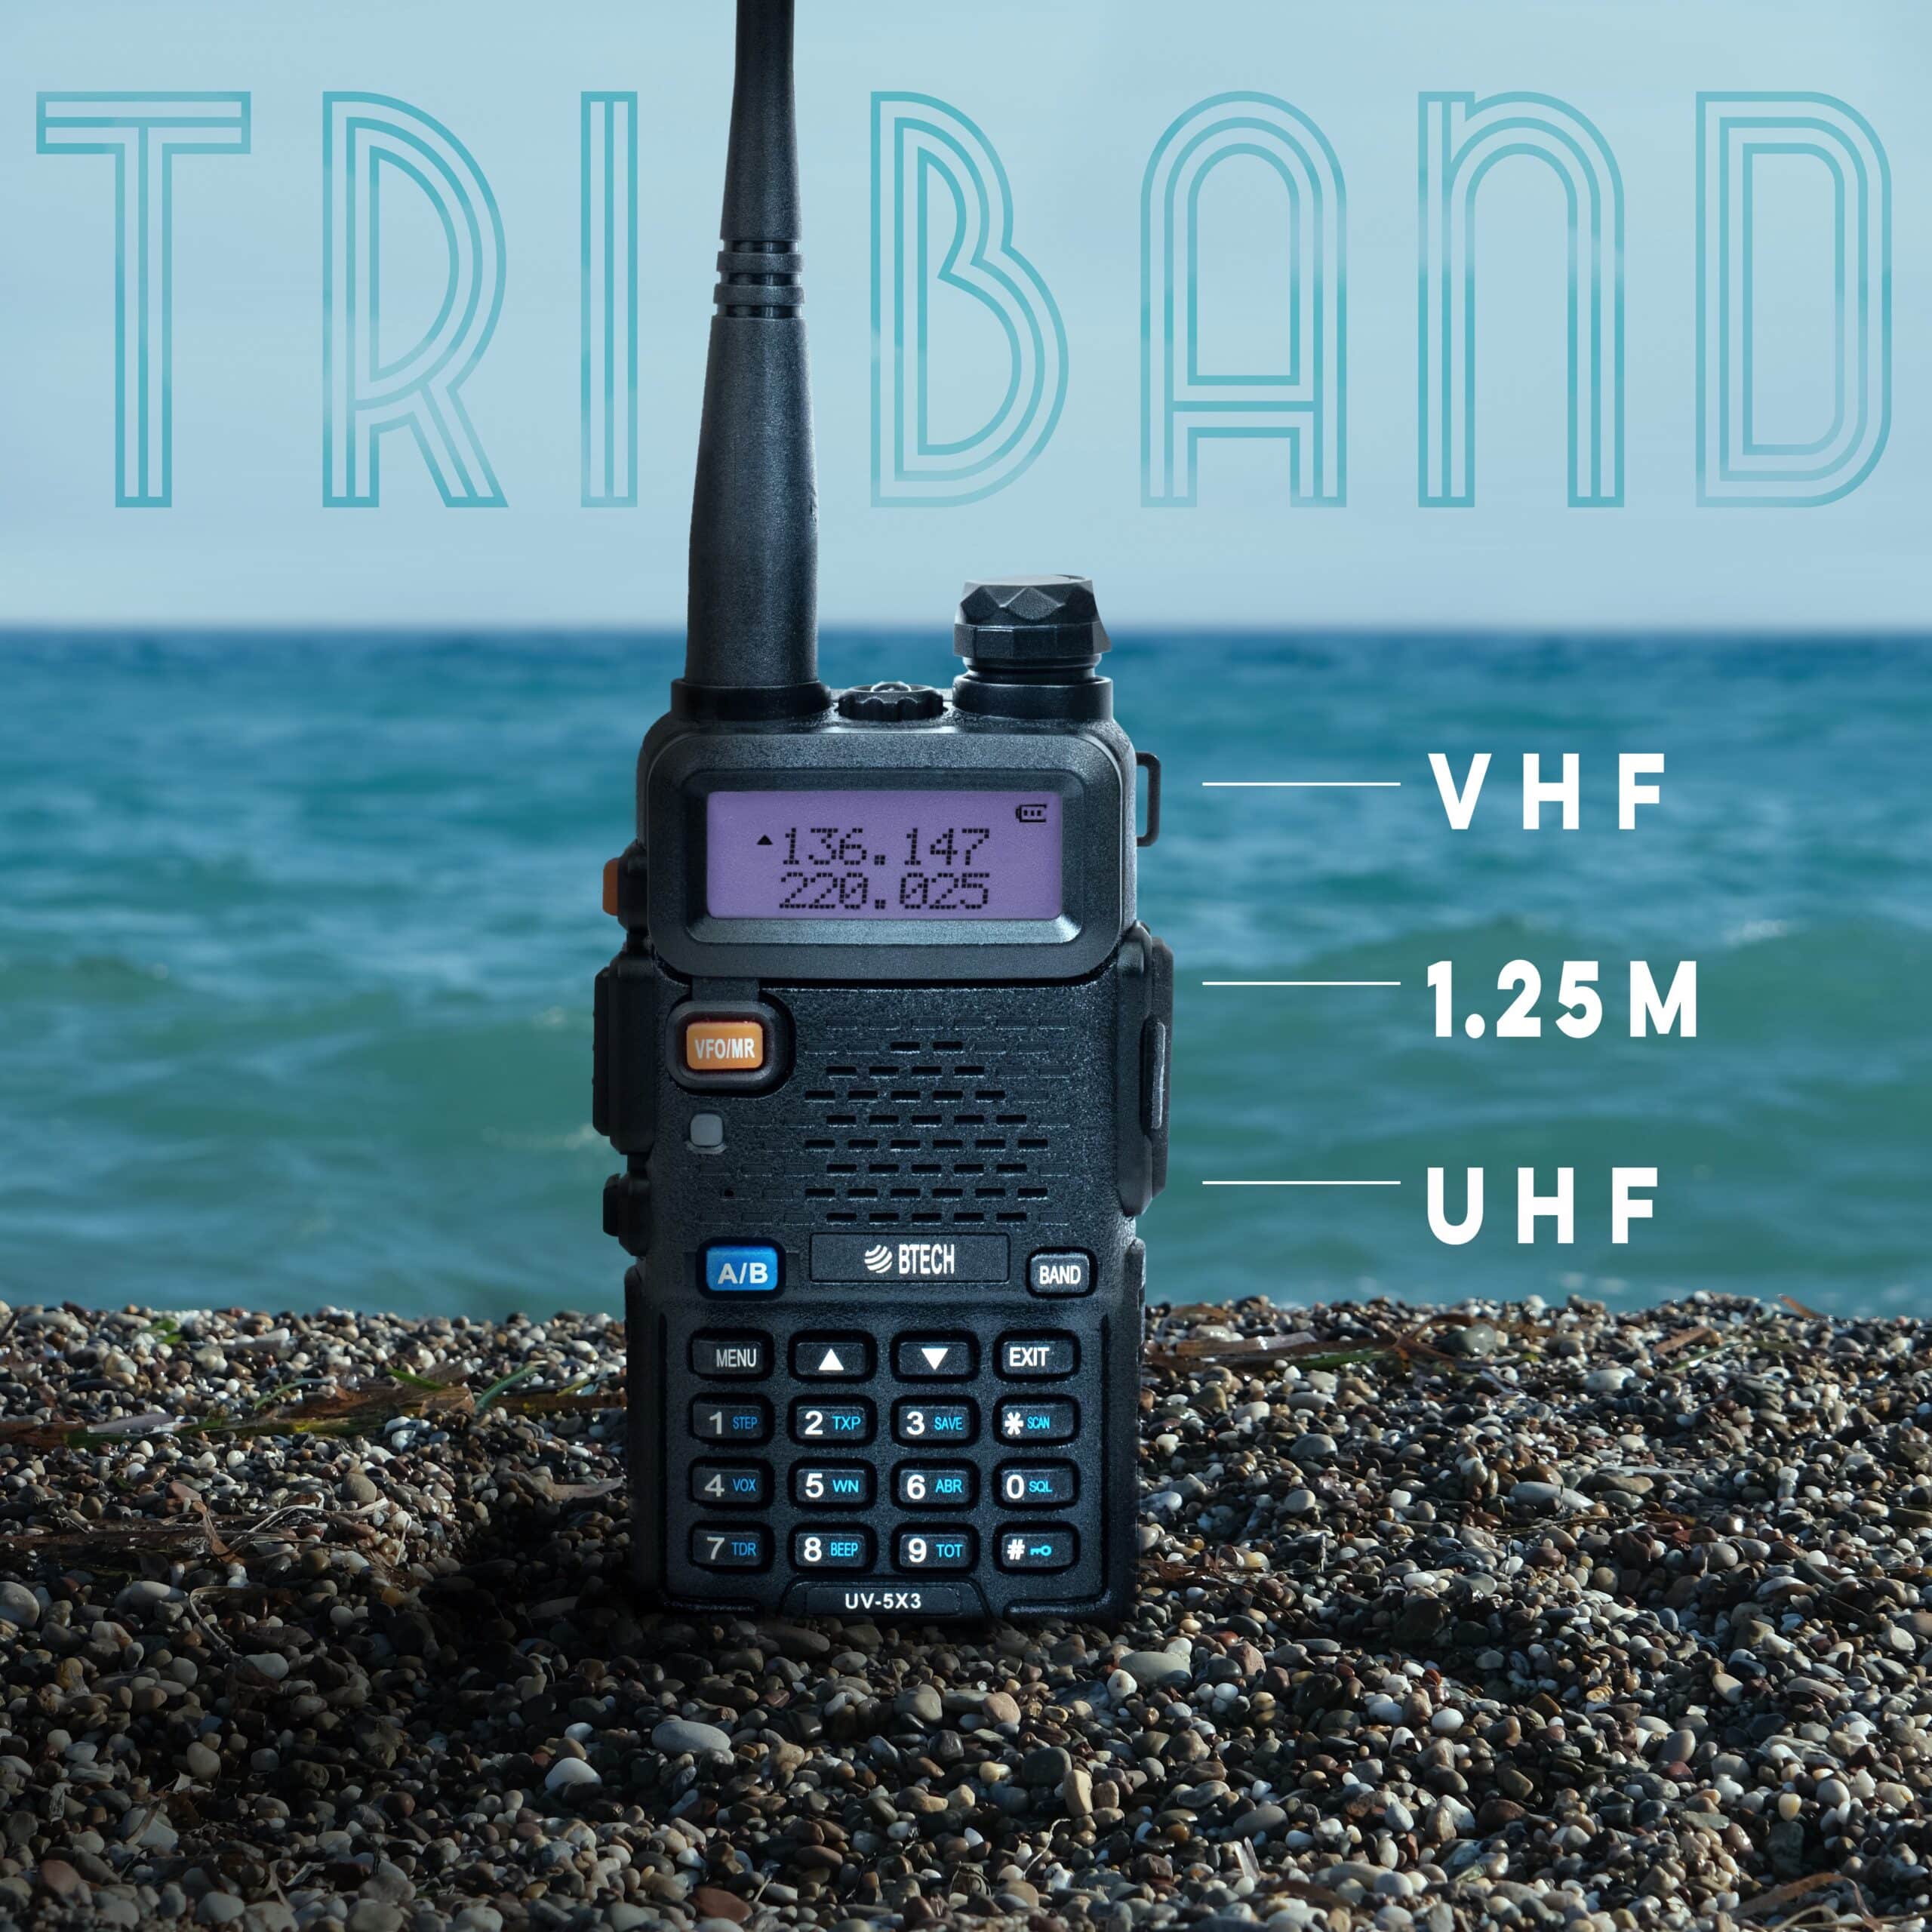 Tri-Band Radio BAOFENG Radio UV-S9X3 5W Radio, 1.25M,VHF UHF Handheld Two Way Radio,USB Charger Rechargeable Walkie Talkies Long Range for Adults with - 4